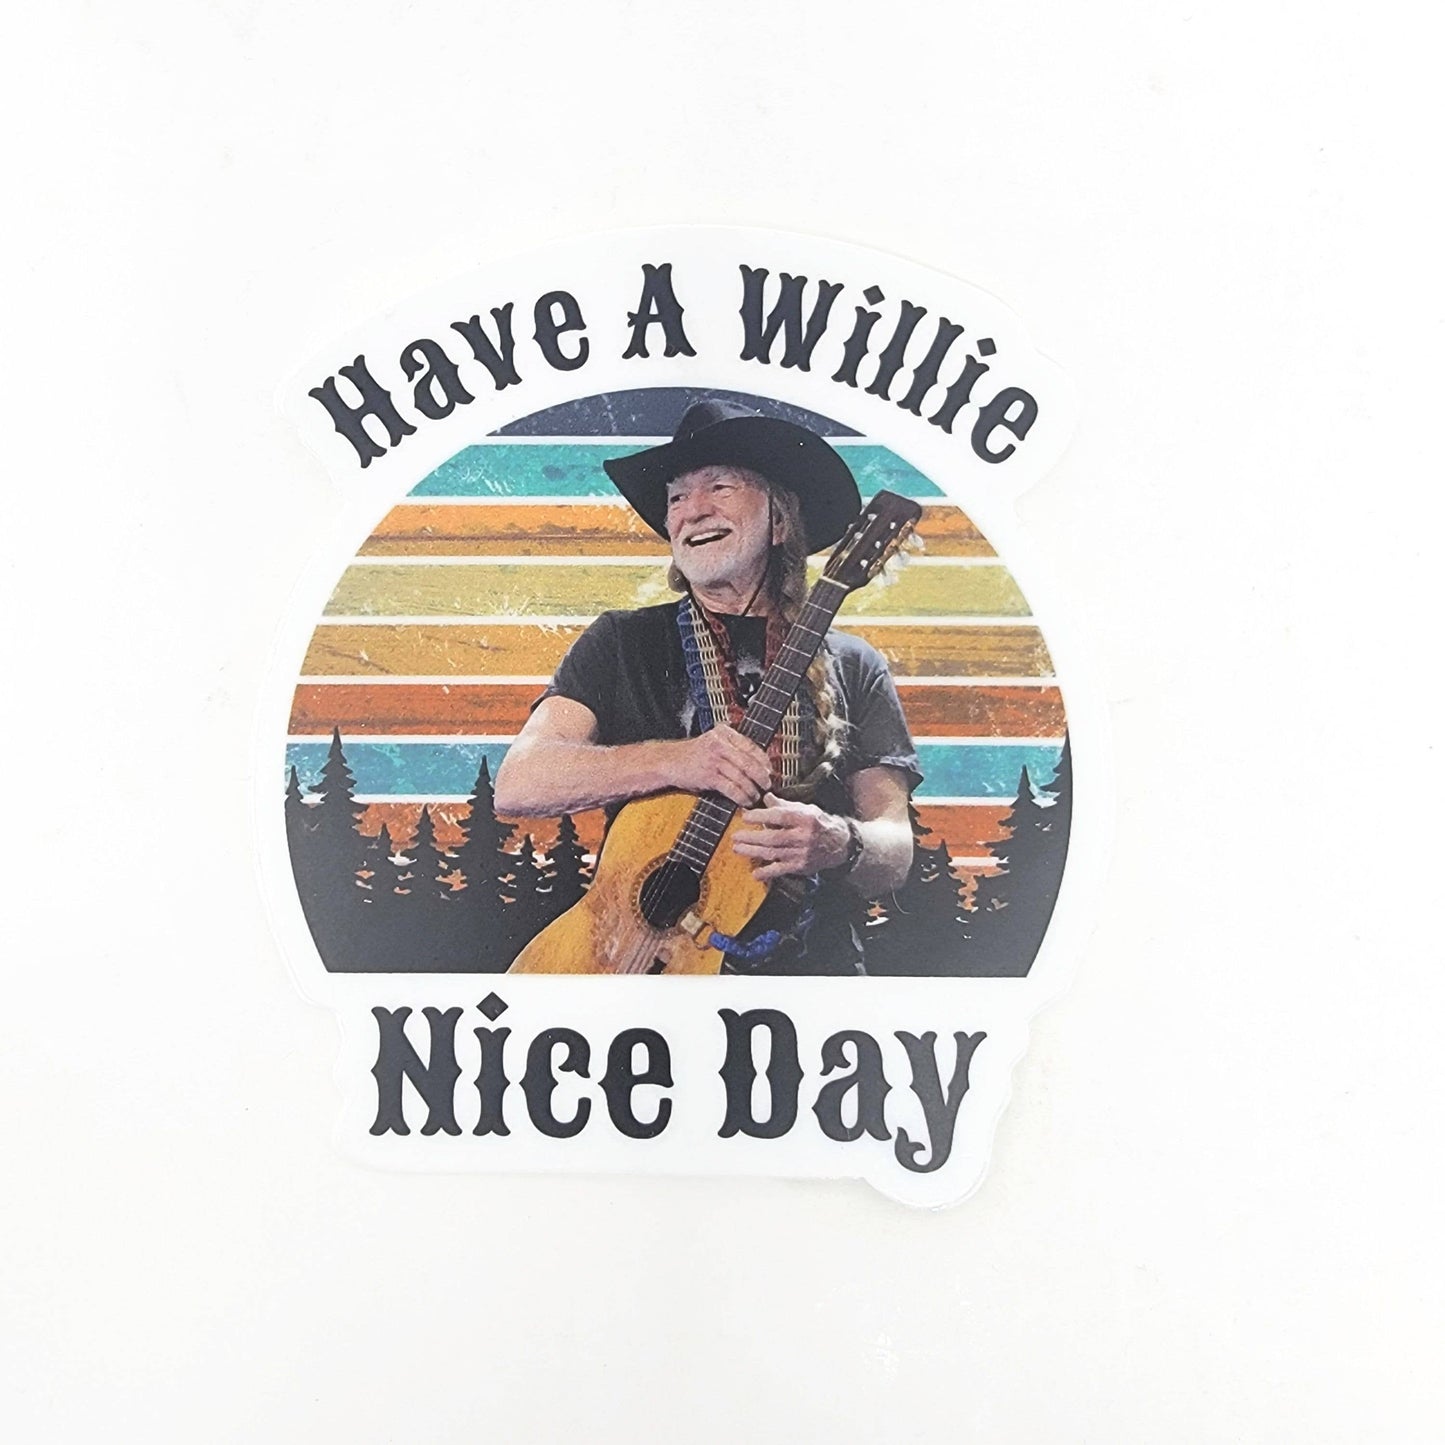 Candlelit Desserts - Vinyl Sticker - Have a Willie Nice Day